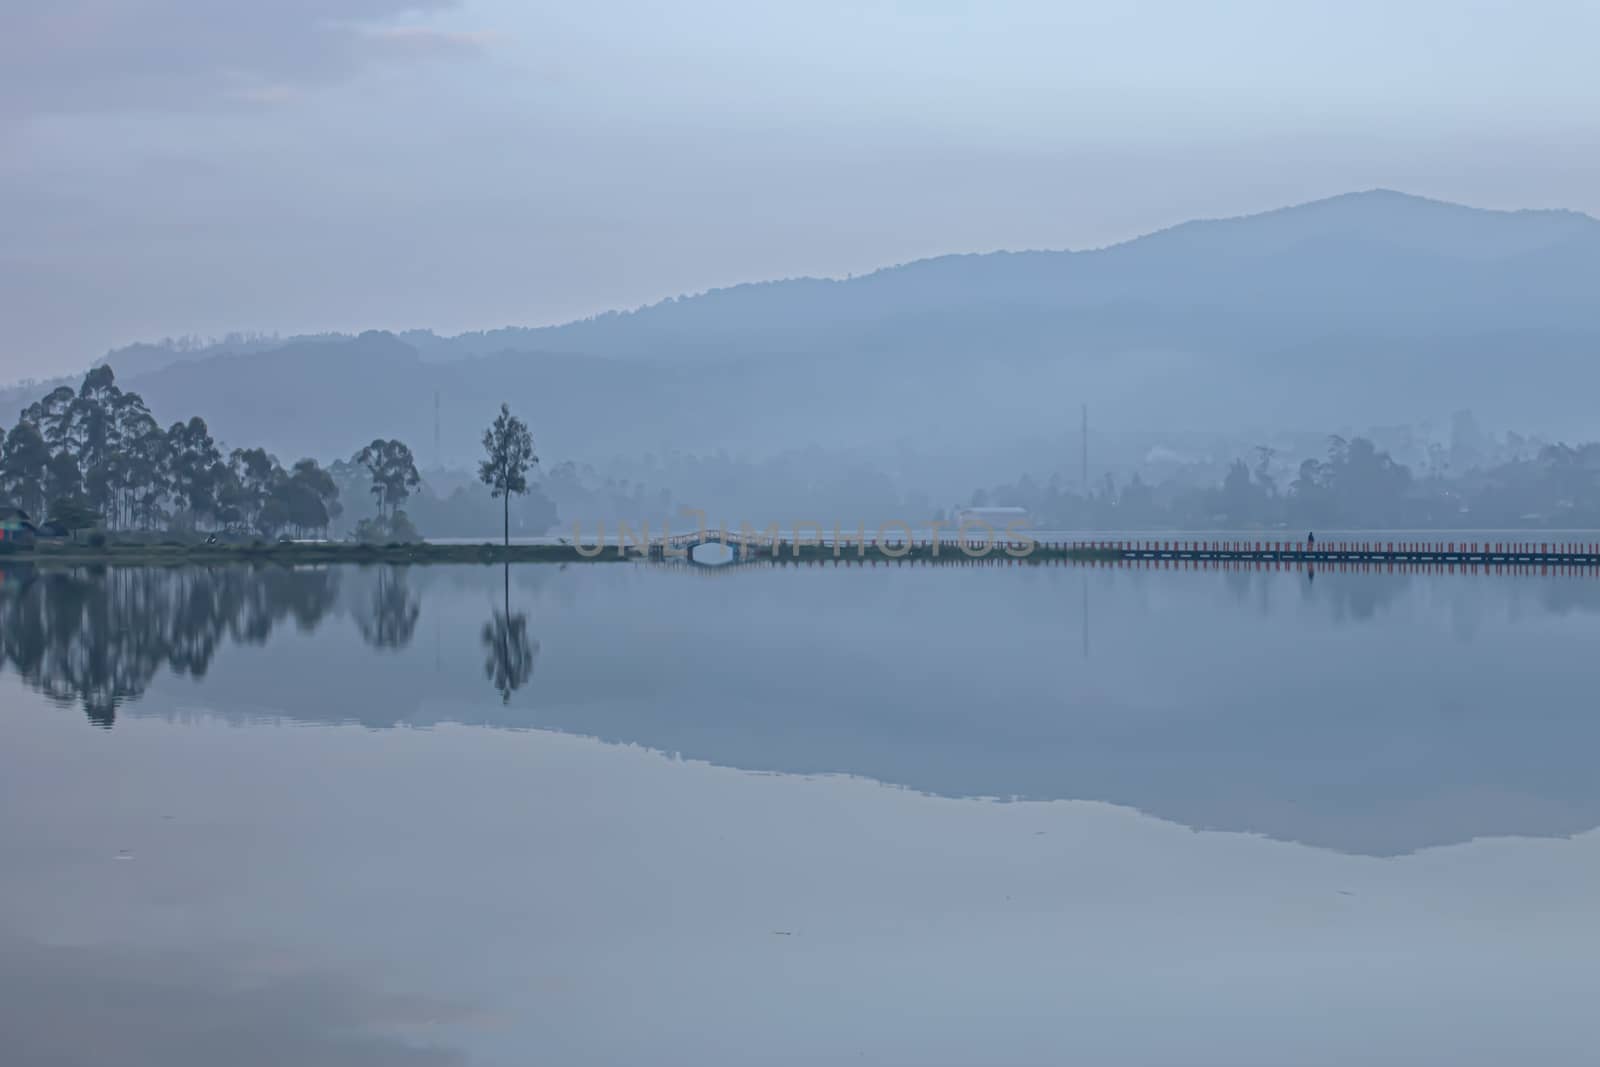 Reflection mountain, bridge and tree on a lake Cileunca Pangalengan - Indonesia